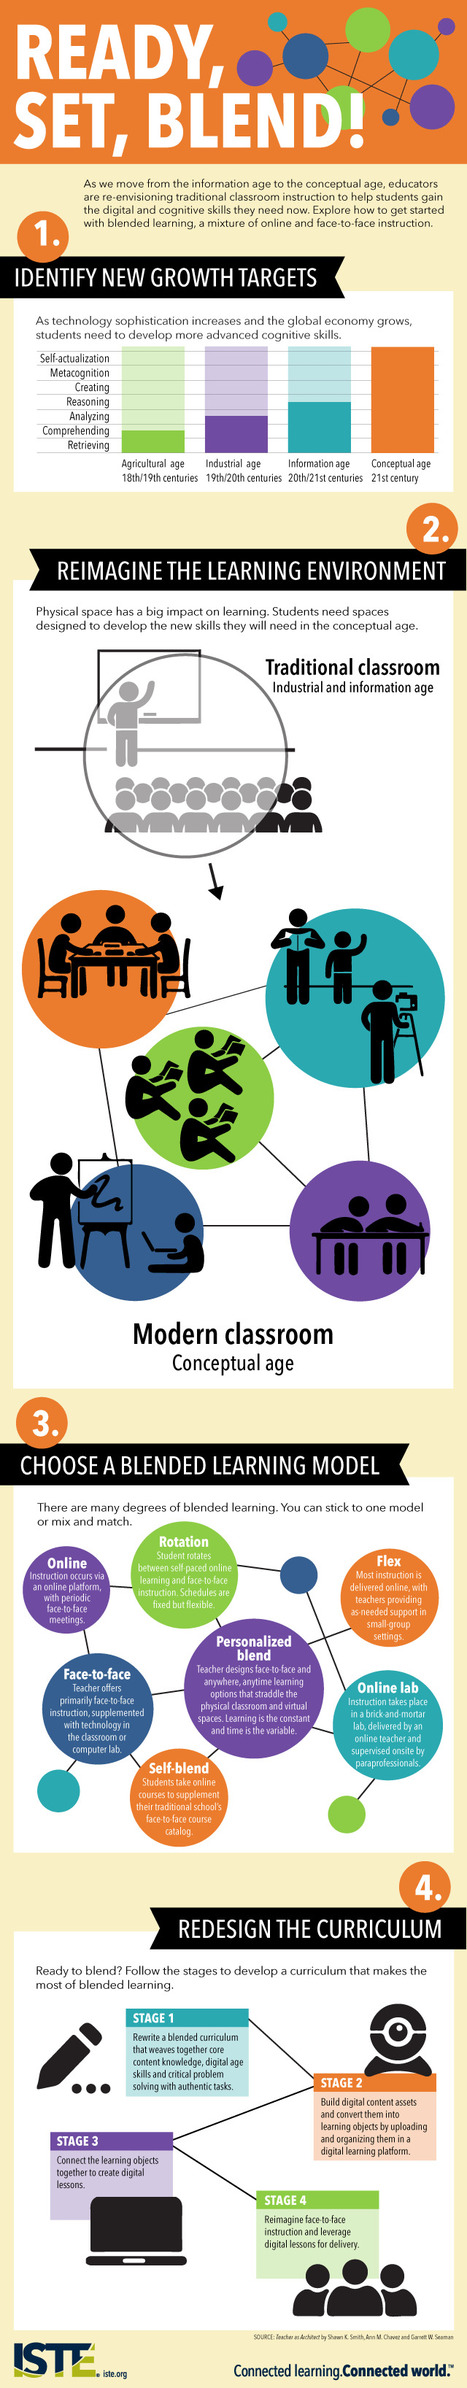 ISTE Infographic: Ready, set, blend! | Pedalogica: educación y TIC | Scoop.it